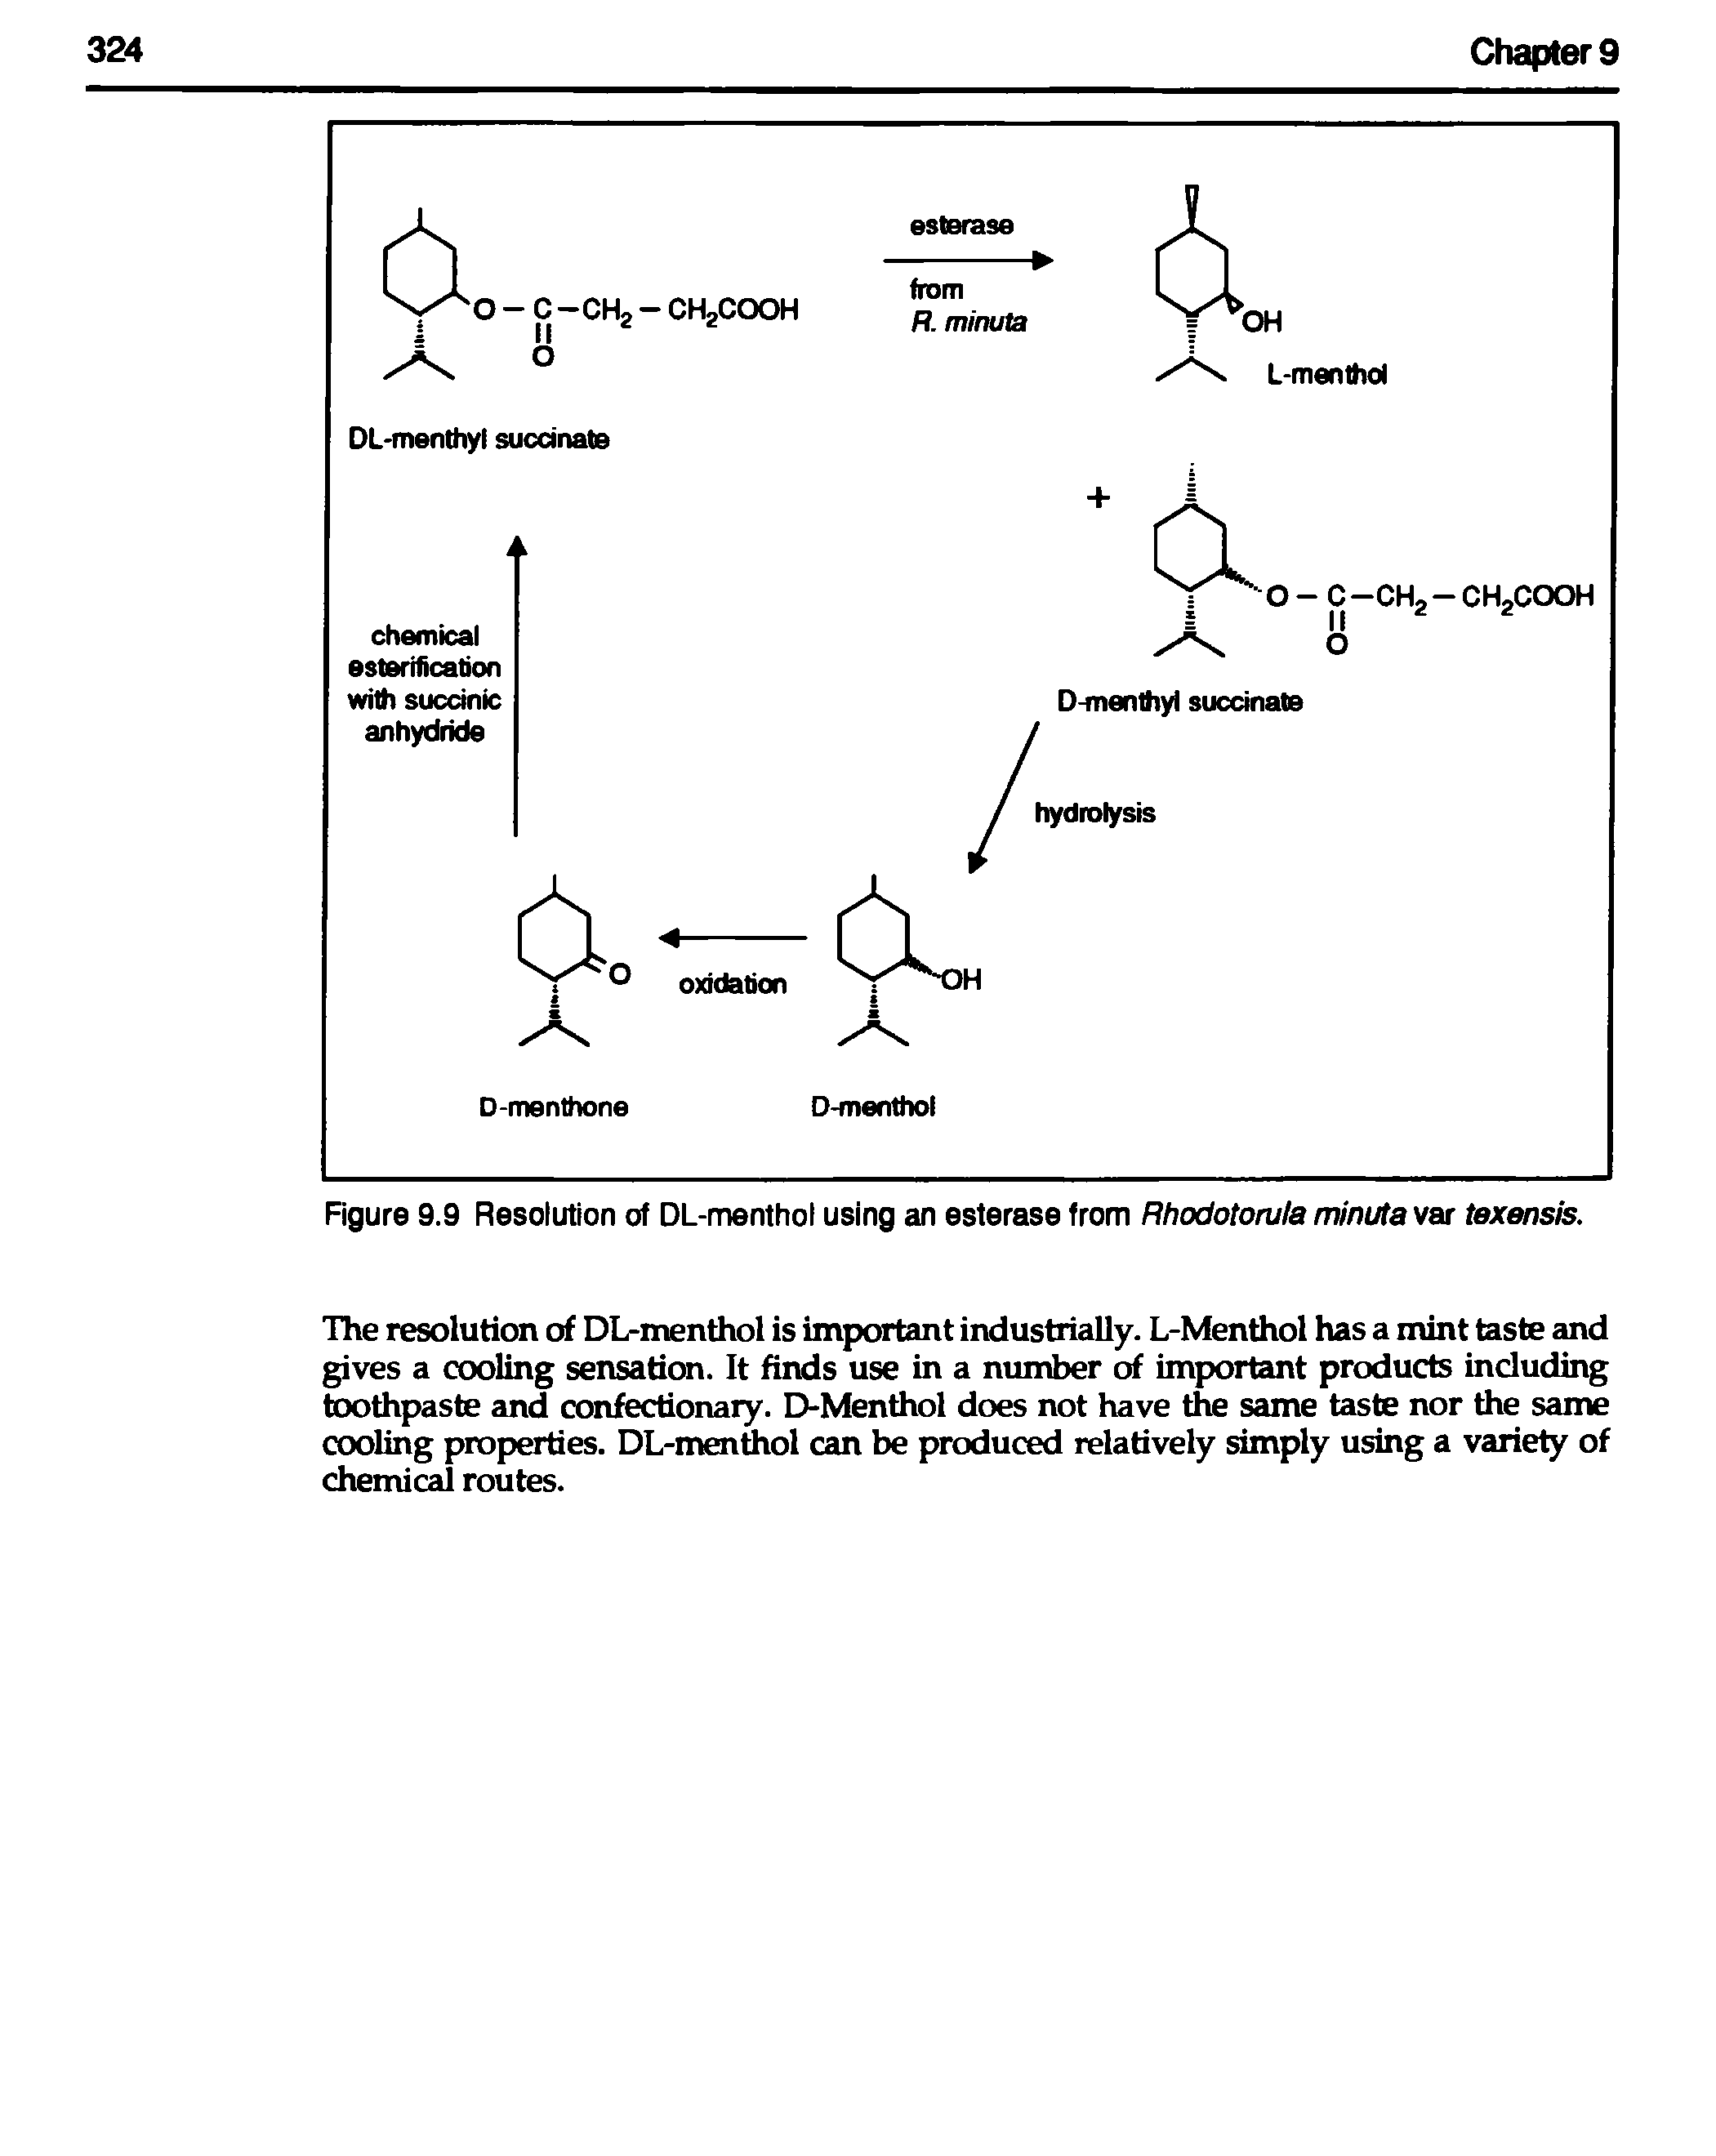 Figure 9.9 Resolution of DL-menthol using an esterase from Rhodotorula minuta var texensis.